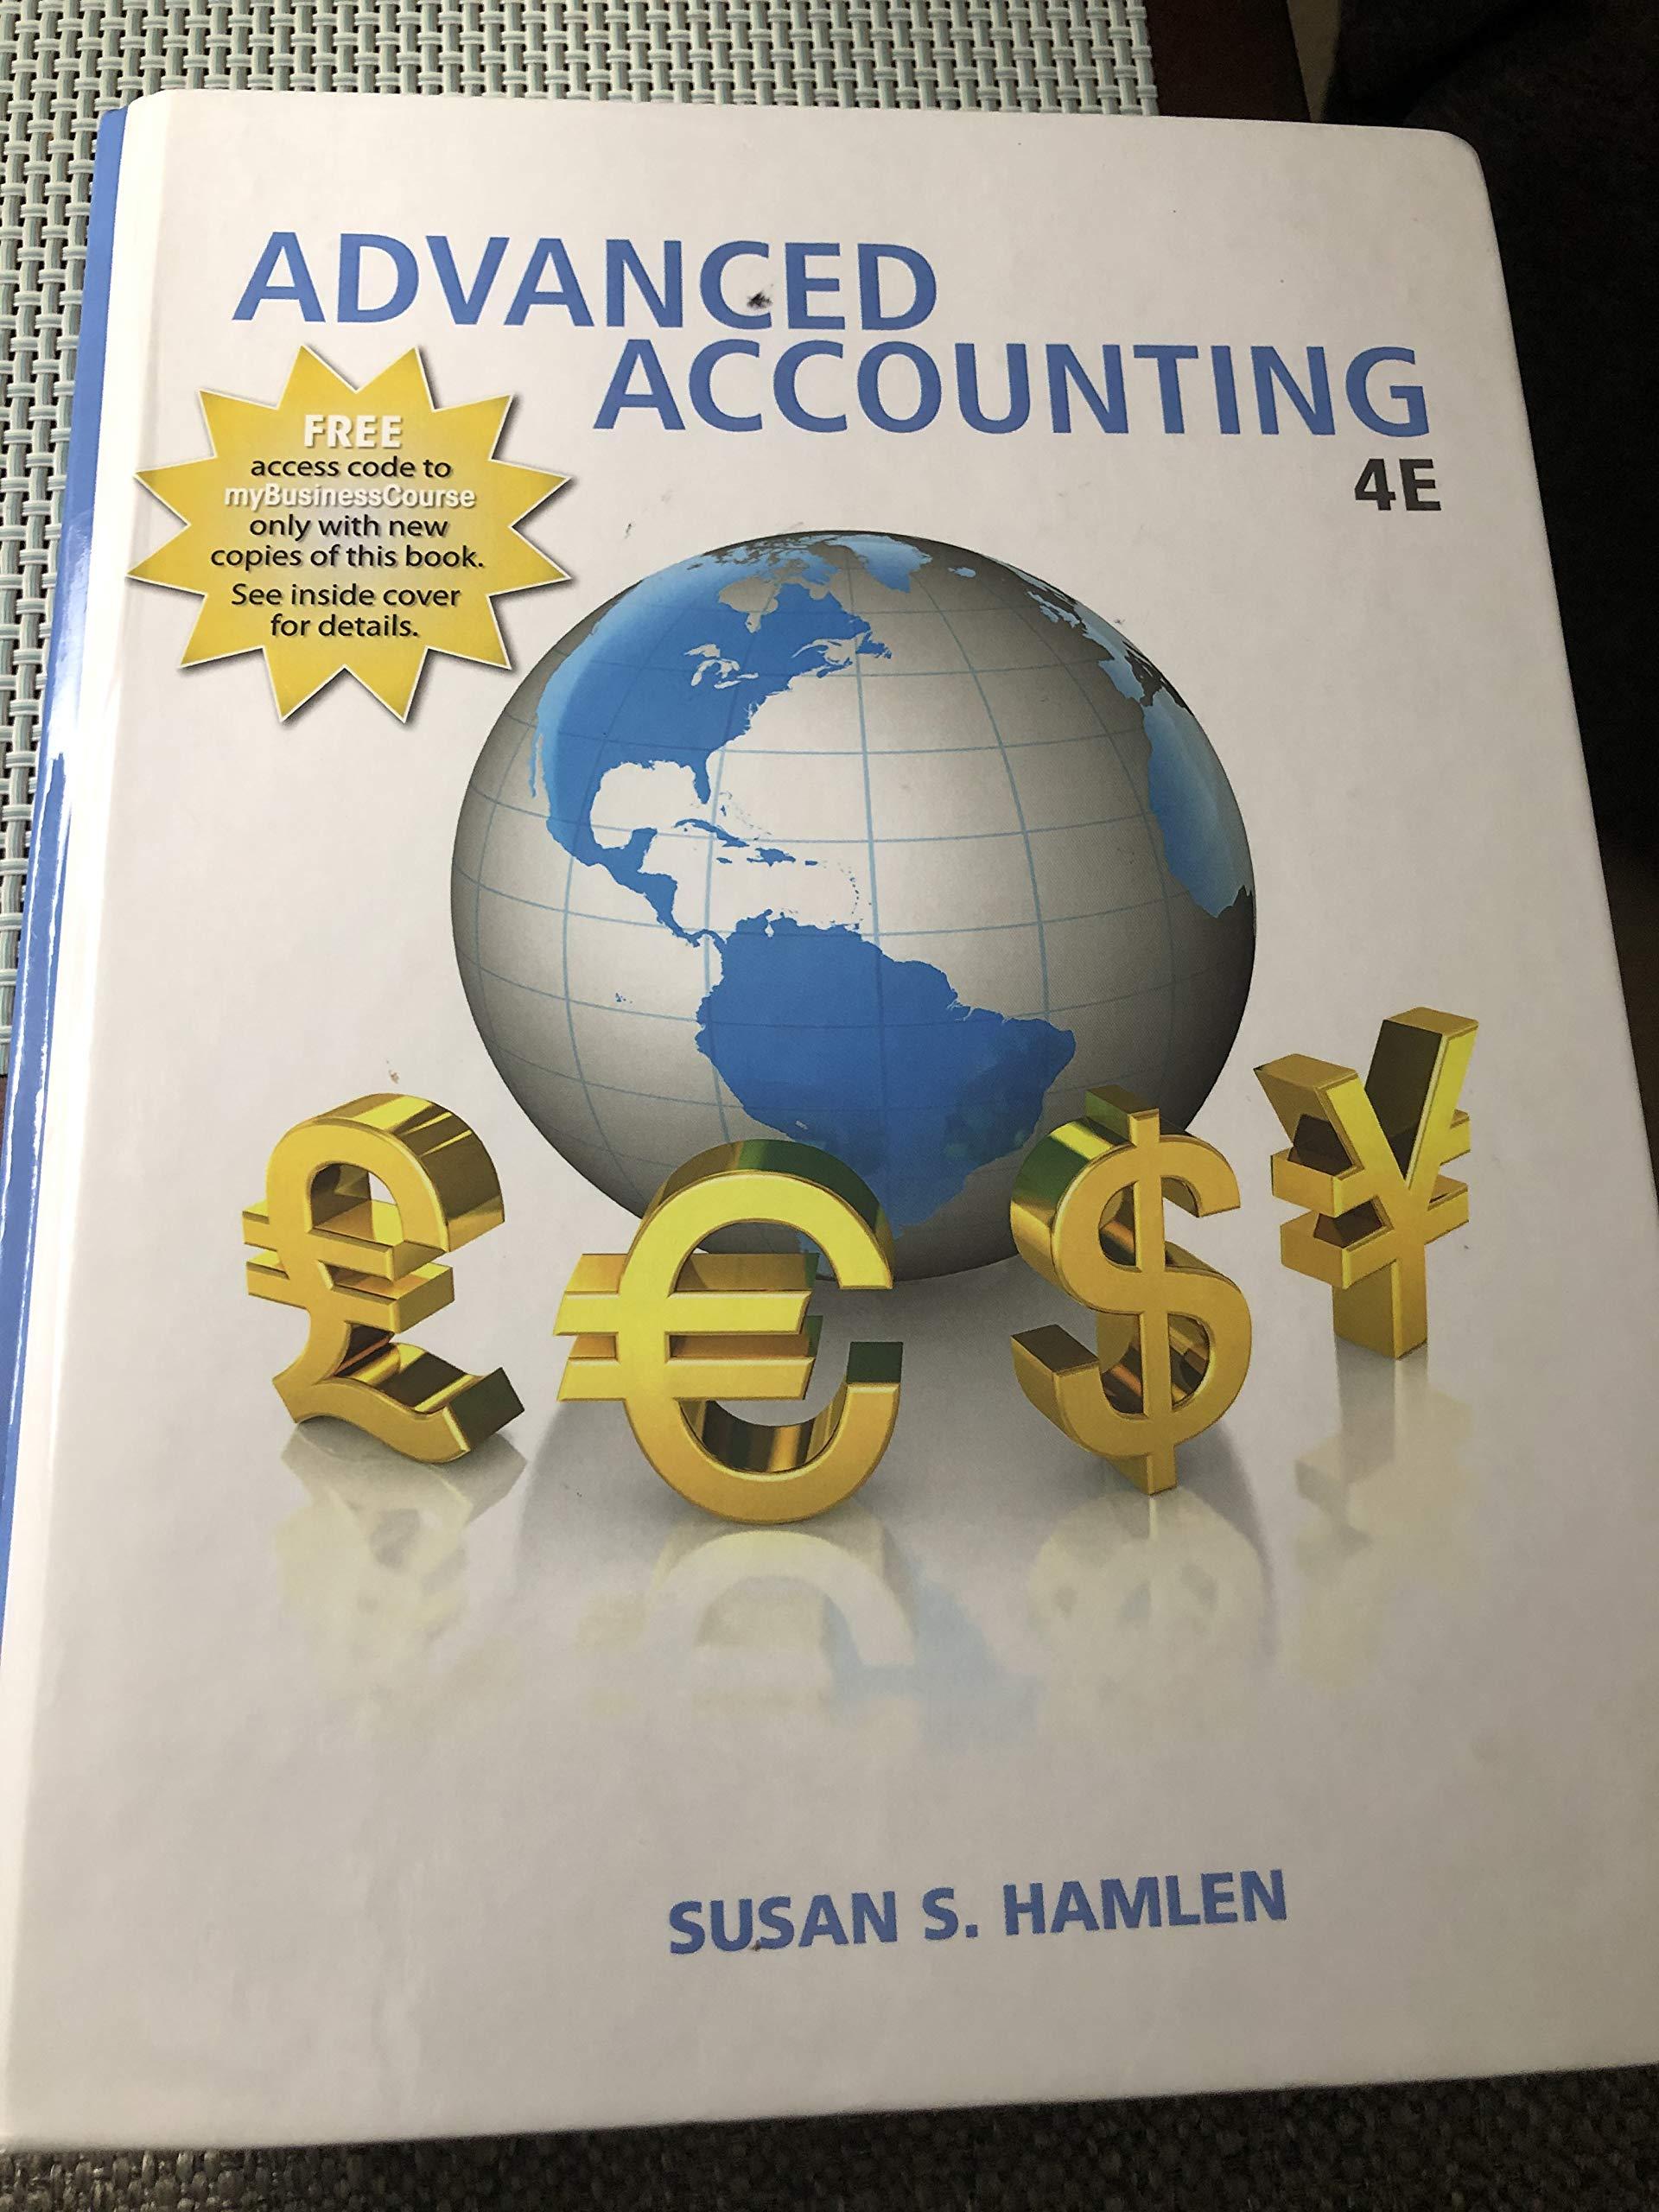 advanced accounting 4th edition susan s. hamlen 1618532618, 9781618532619